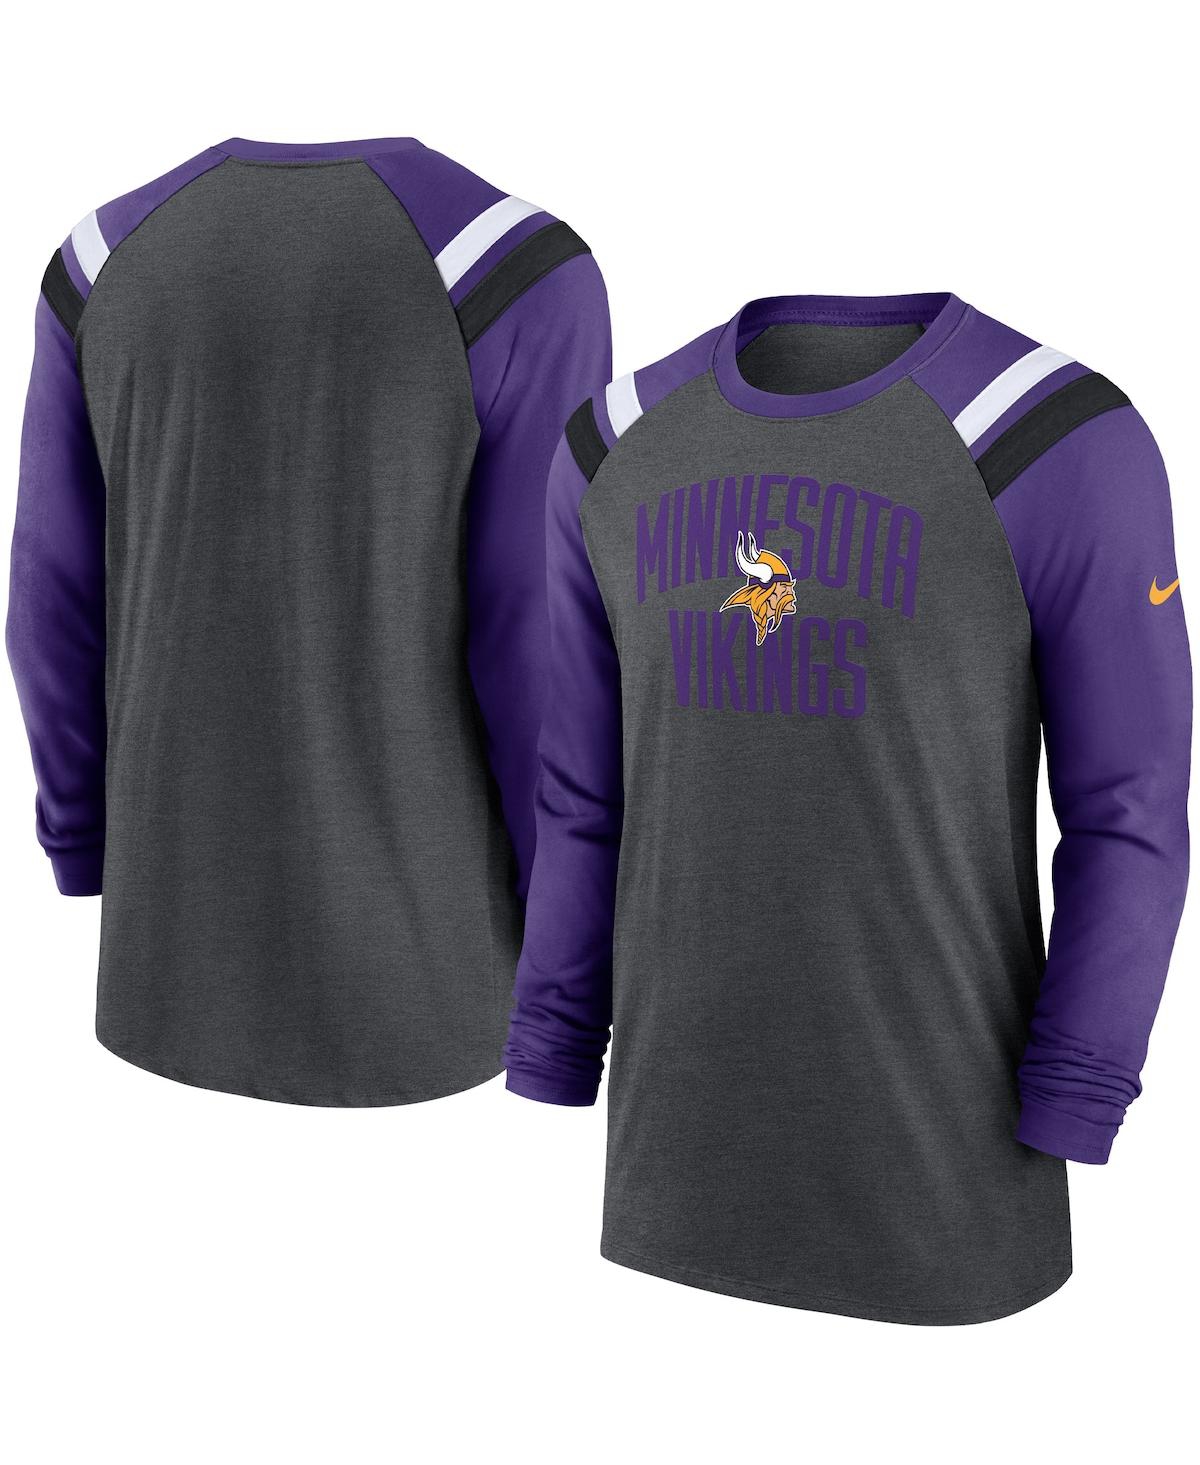 Shop Nike Men's  Heathered Charcoal, Purple Minnesota Vikings Tri-blend Raglan Athletic Long Sleeve Fashio In Heathered Charcoal,purple